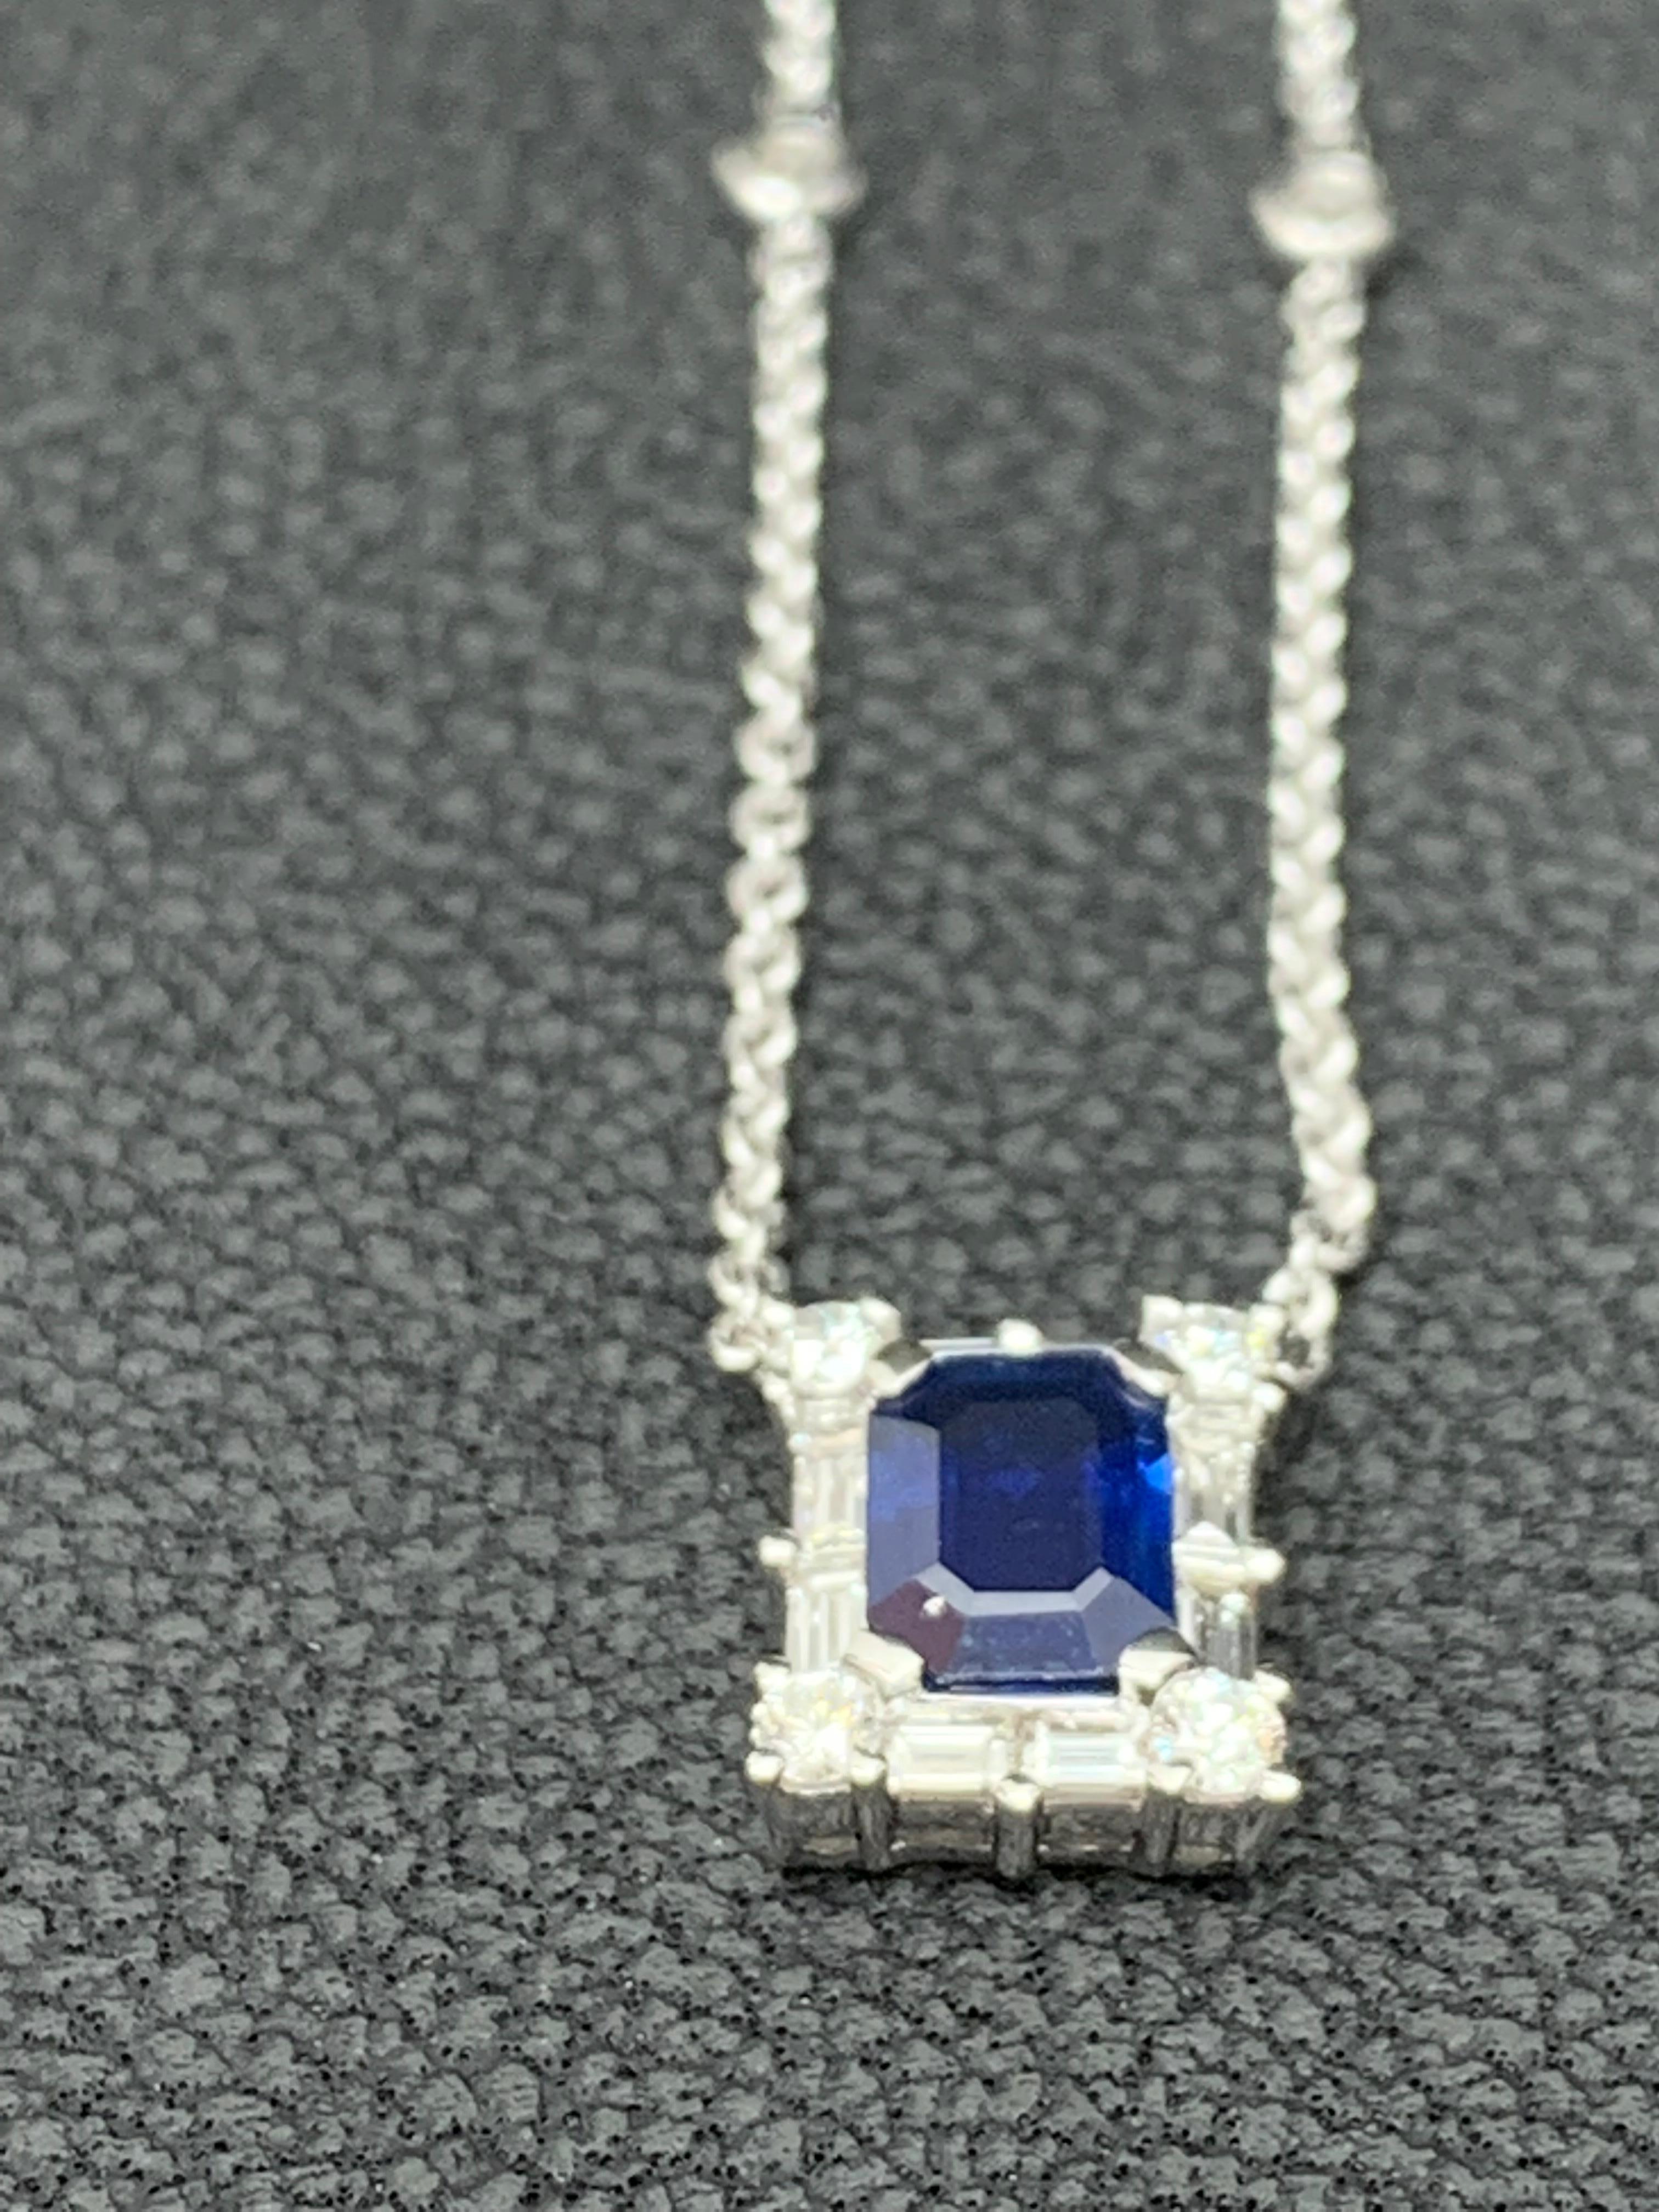 0.72 Carat Emerald Cut Blue Sapphire Diamond Pendant Necklace in 18K White Gold For Sale 2